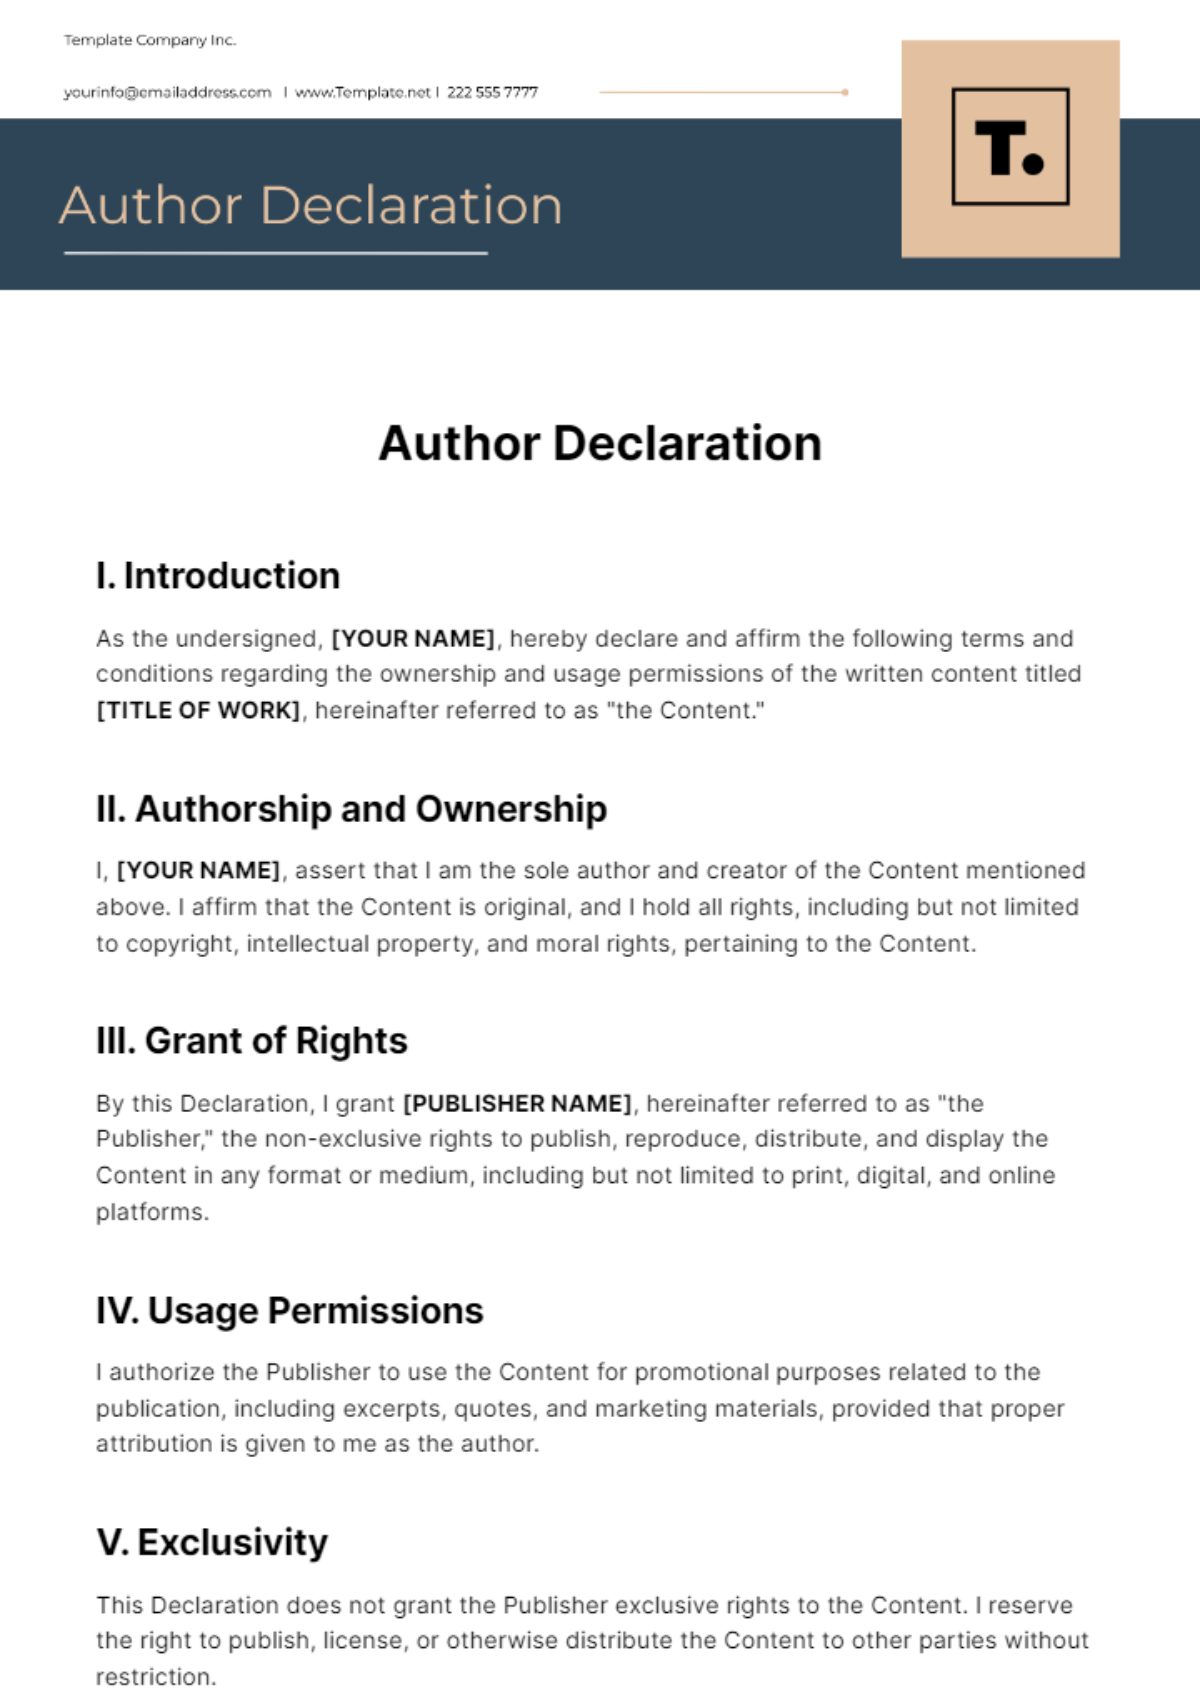 Author Declaration Template